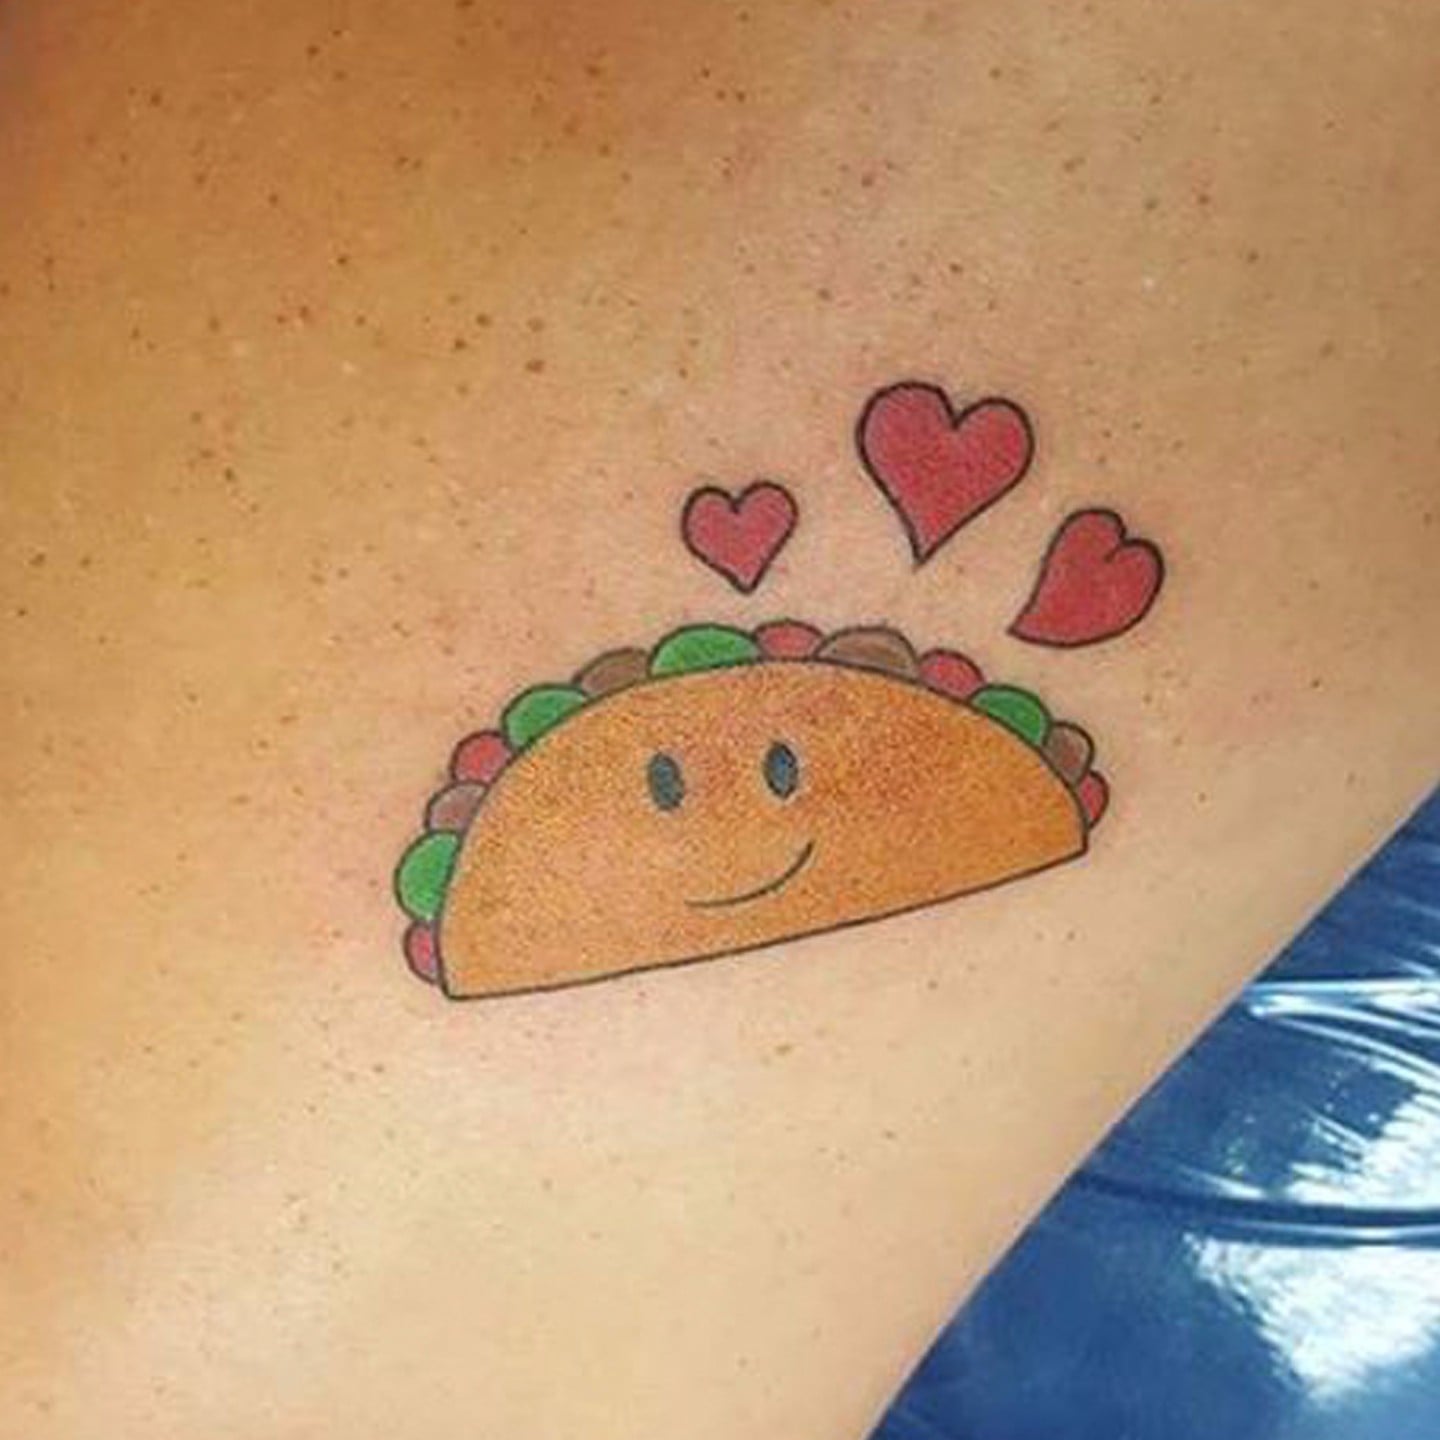 Taco and Burrito matching tattoo for couple